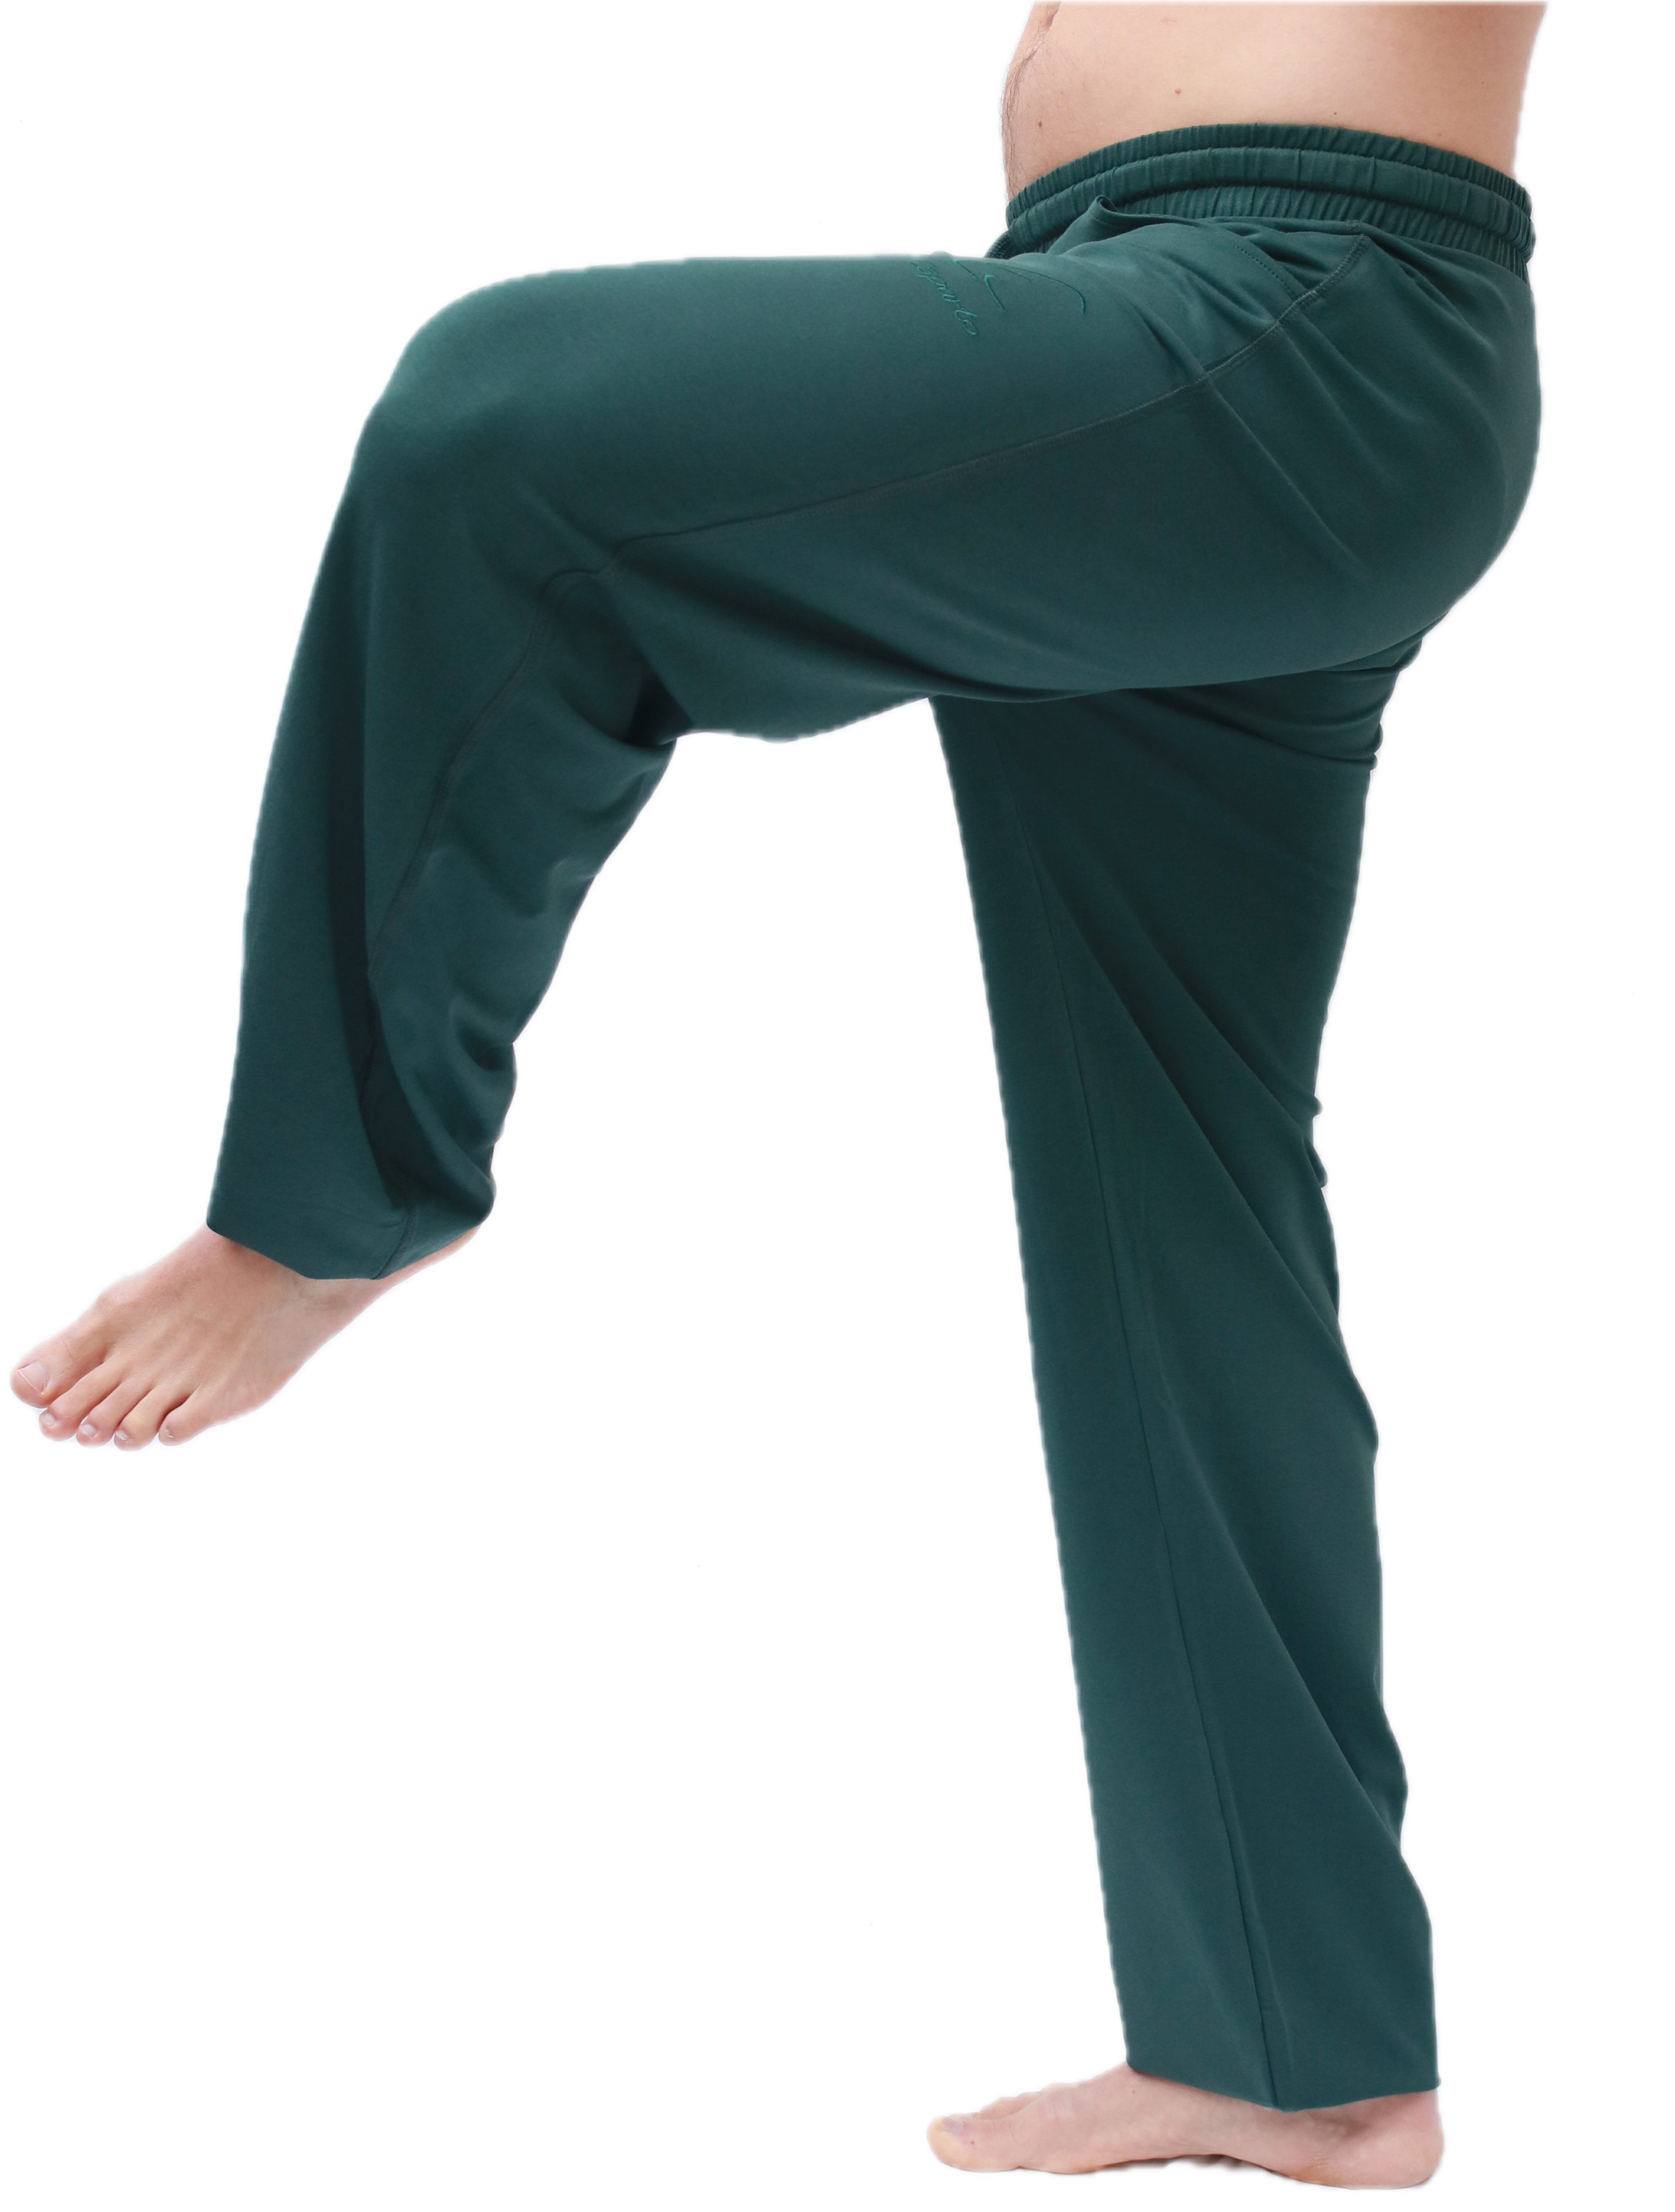 ESPARTO Yogahose Yoga- Bindegürtel Thymian und Sporthose / Sitaara unisex (mit Kordel -kordel Bund) im